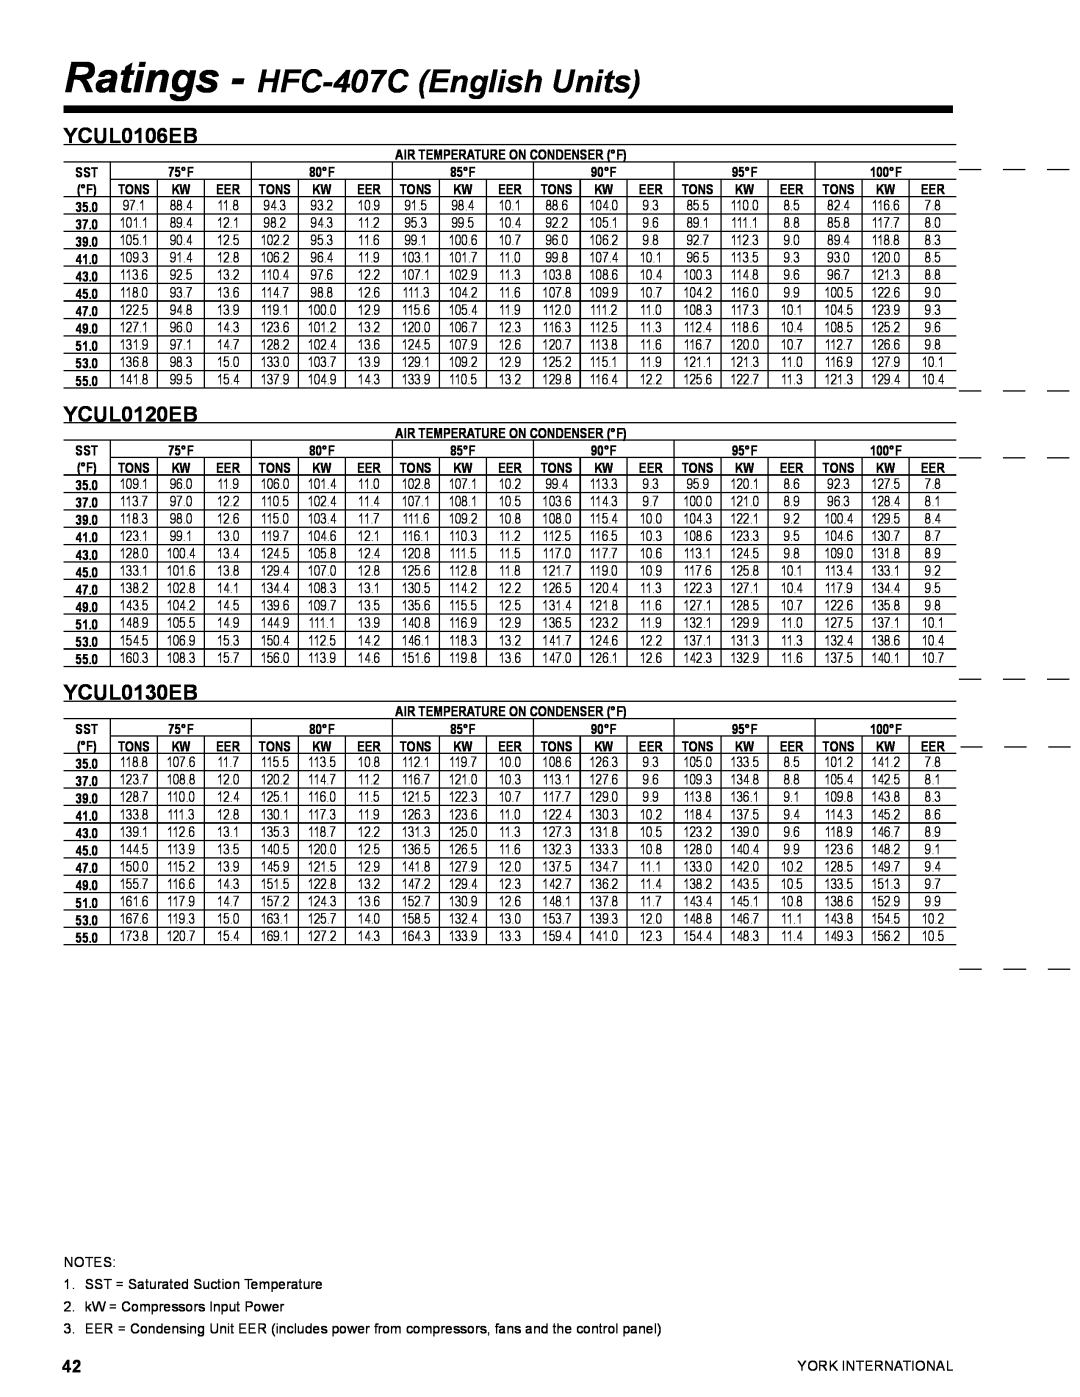 York YCUL0016 manual Ratings - HFC-407CEnglish Units, YCUL0106EB, YCUL0120EB, YCUL0130EB 